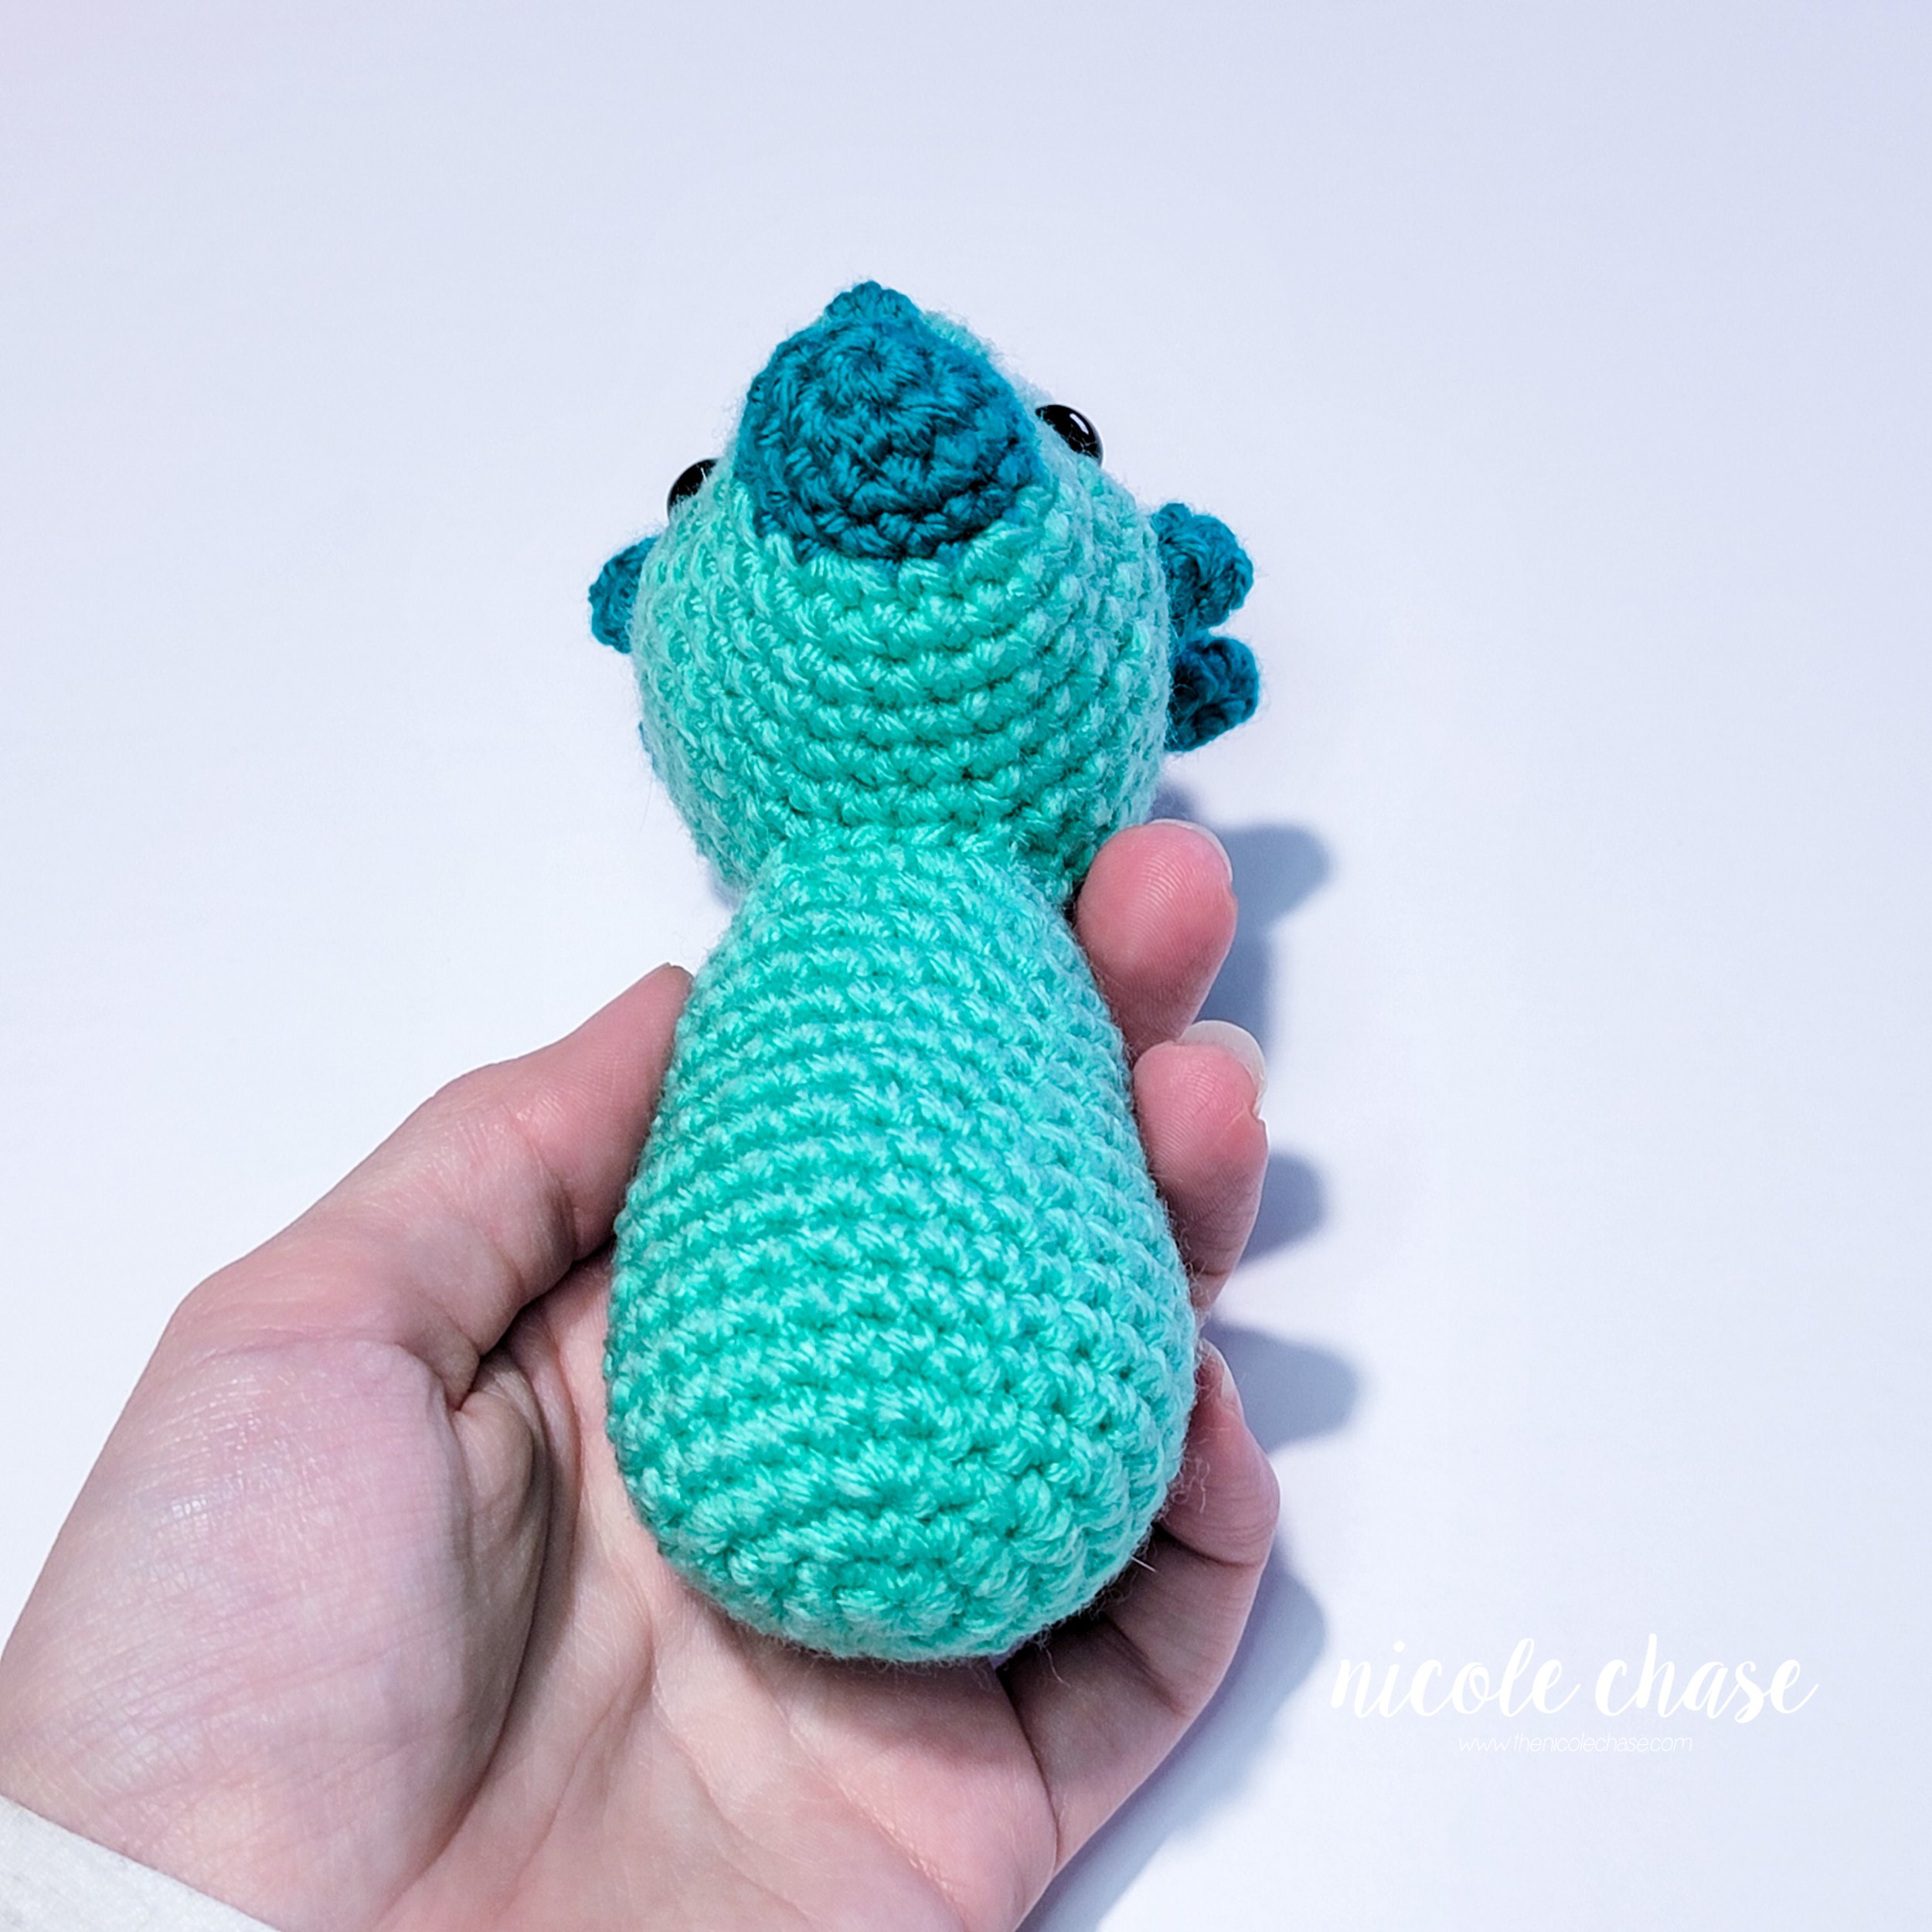 Mini Stevie the Stygimoloch - Free Dinosaur Crochet Pattern — Nicole Chase